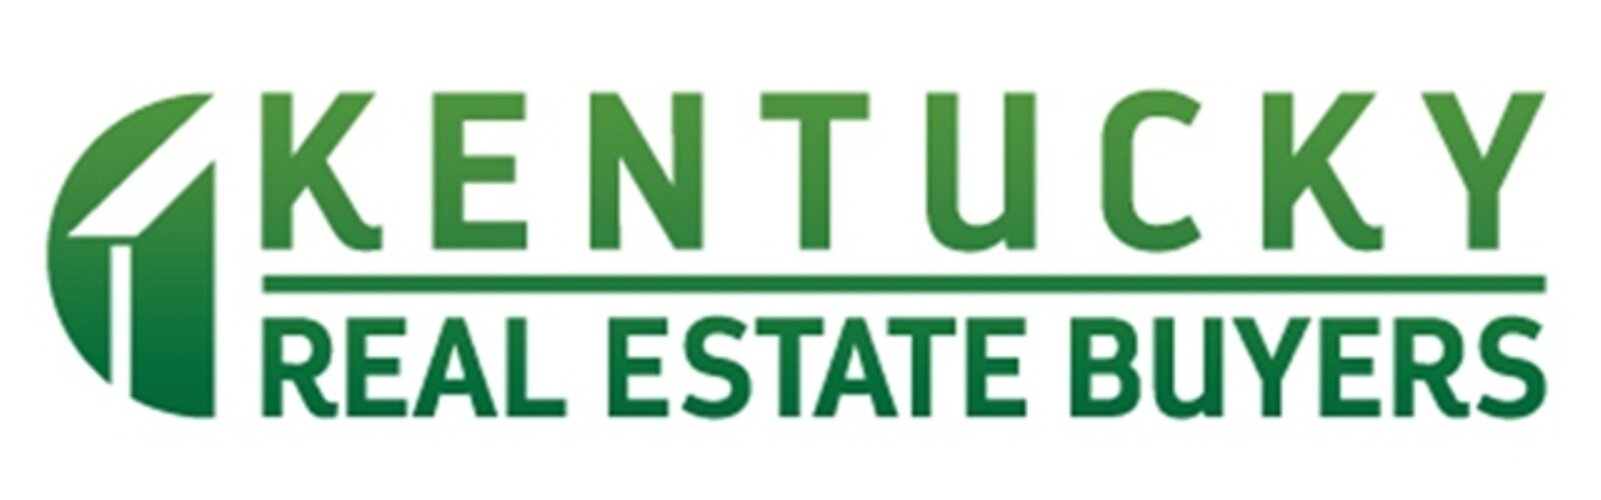 Kentucky Real Estate Buyers logo